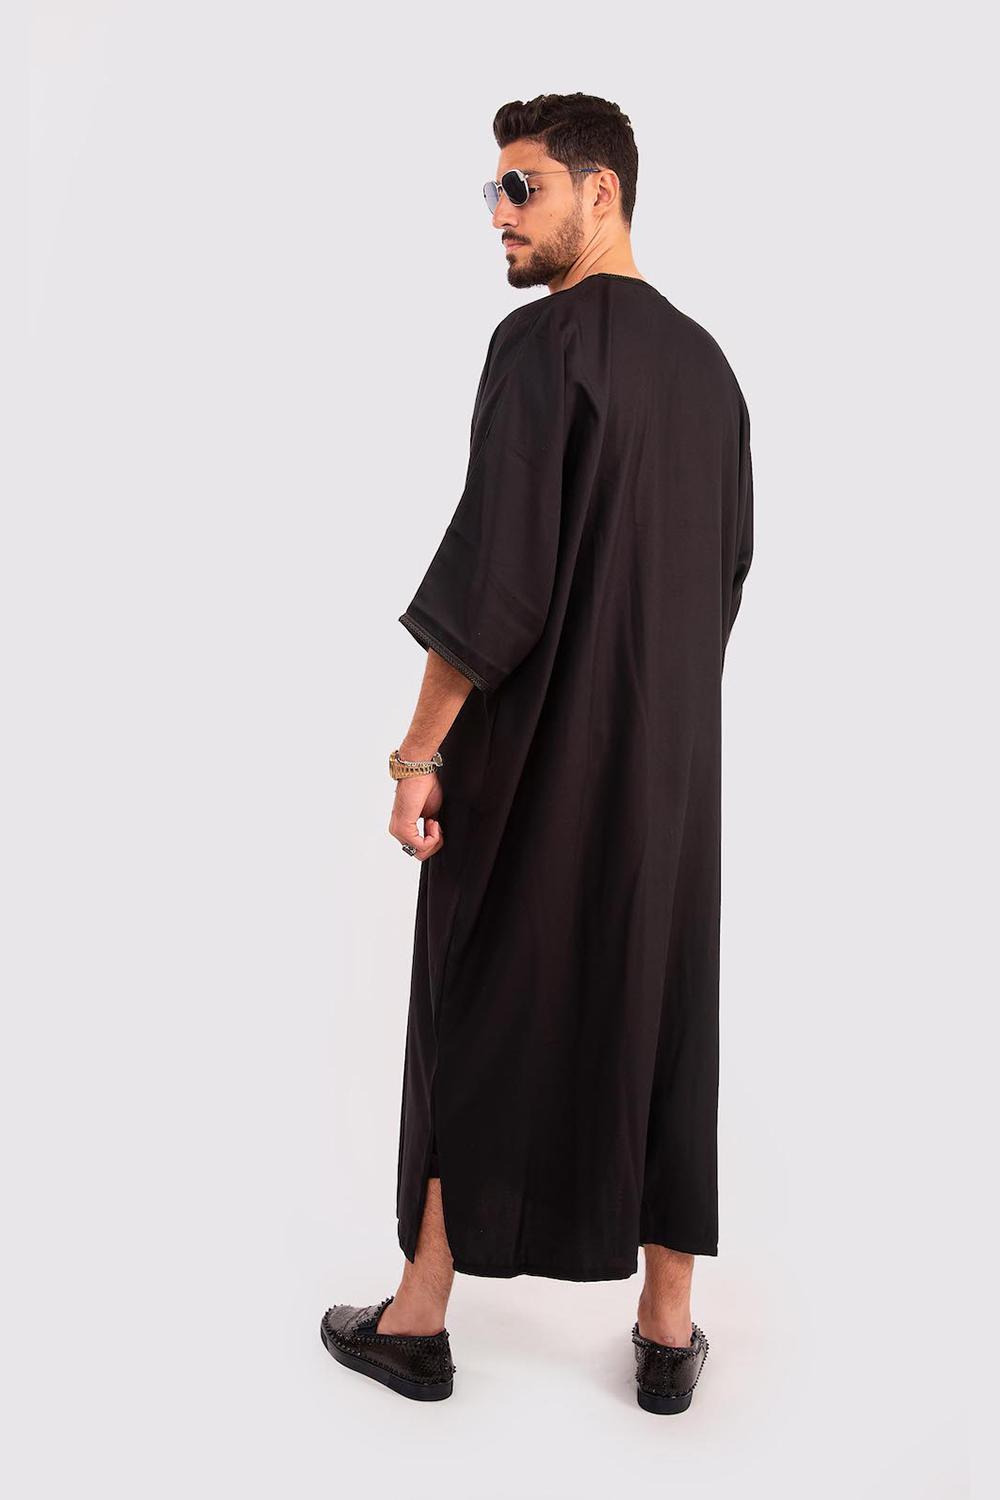 Gandoura Rais Men's Long Gandoura Robe Long Sleeve Thobe in Black